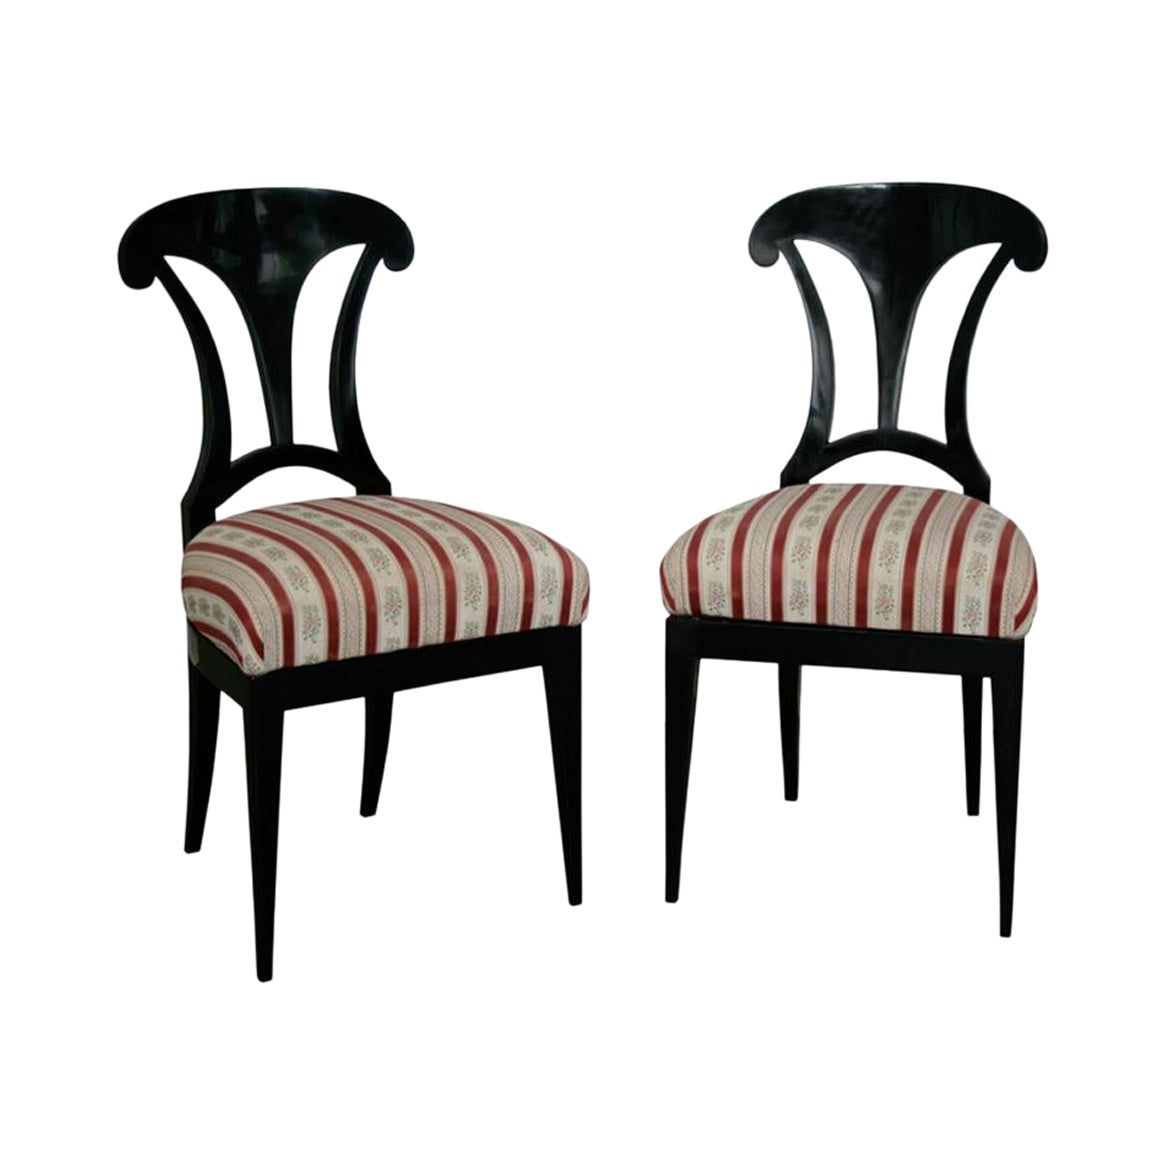 19th Century Fine Ebonized Biedermeier Chairs. Vienna, c. 1825-30. For Sale